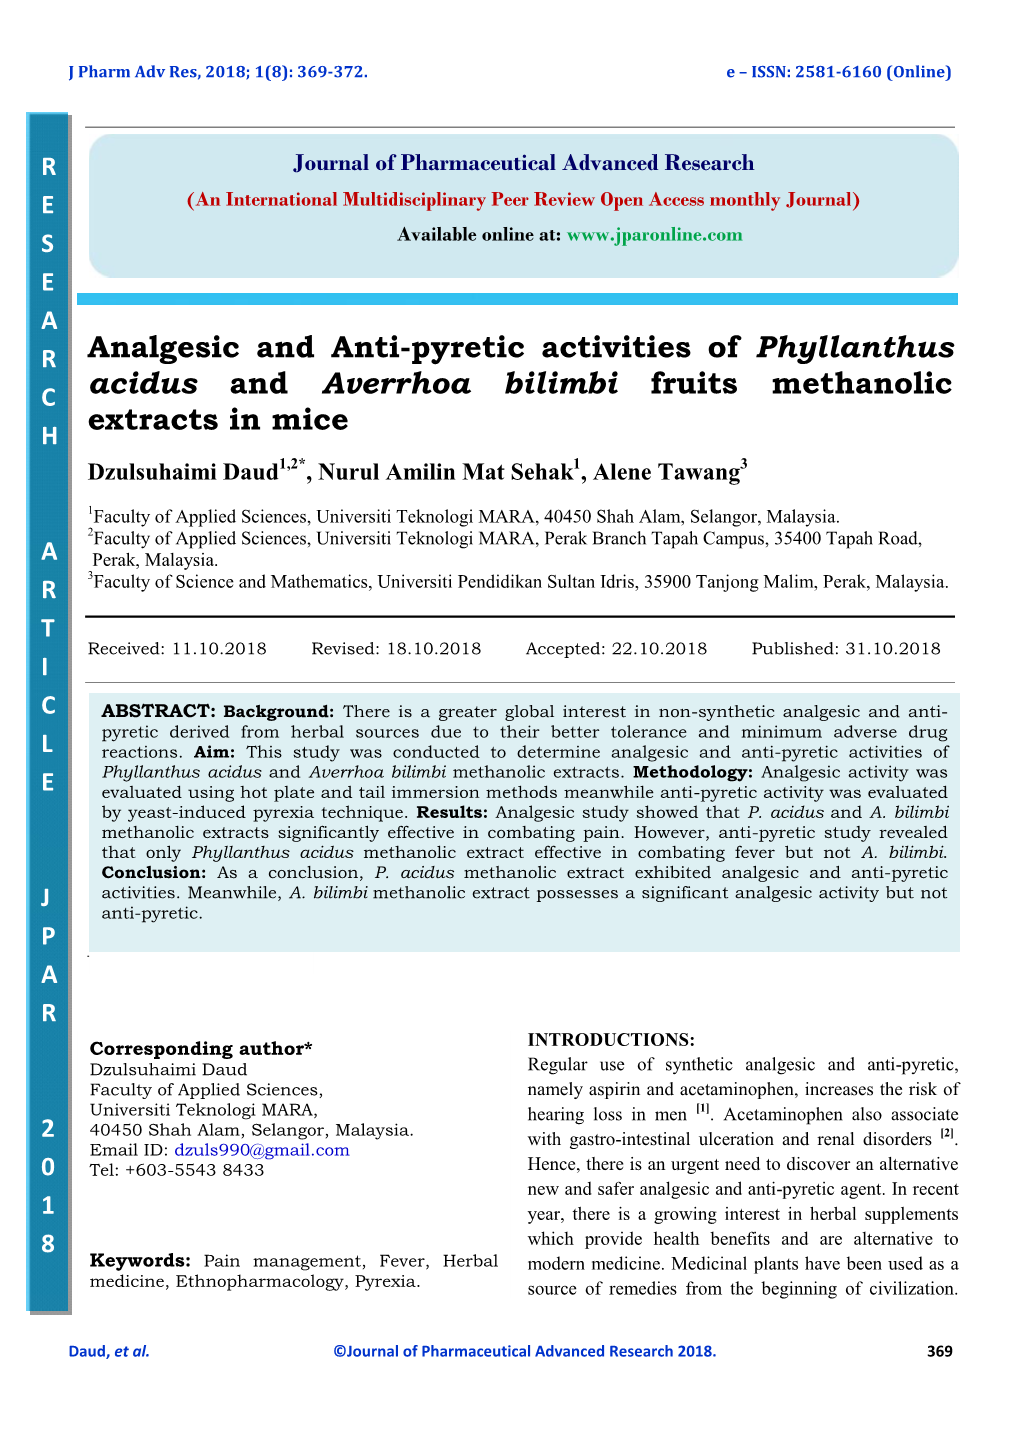 Analgesic and Anti-Pyretic Activities of Phyllanthus Acidus and Averrhoa Bilimbi Methanolic Extracts